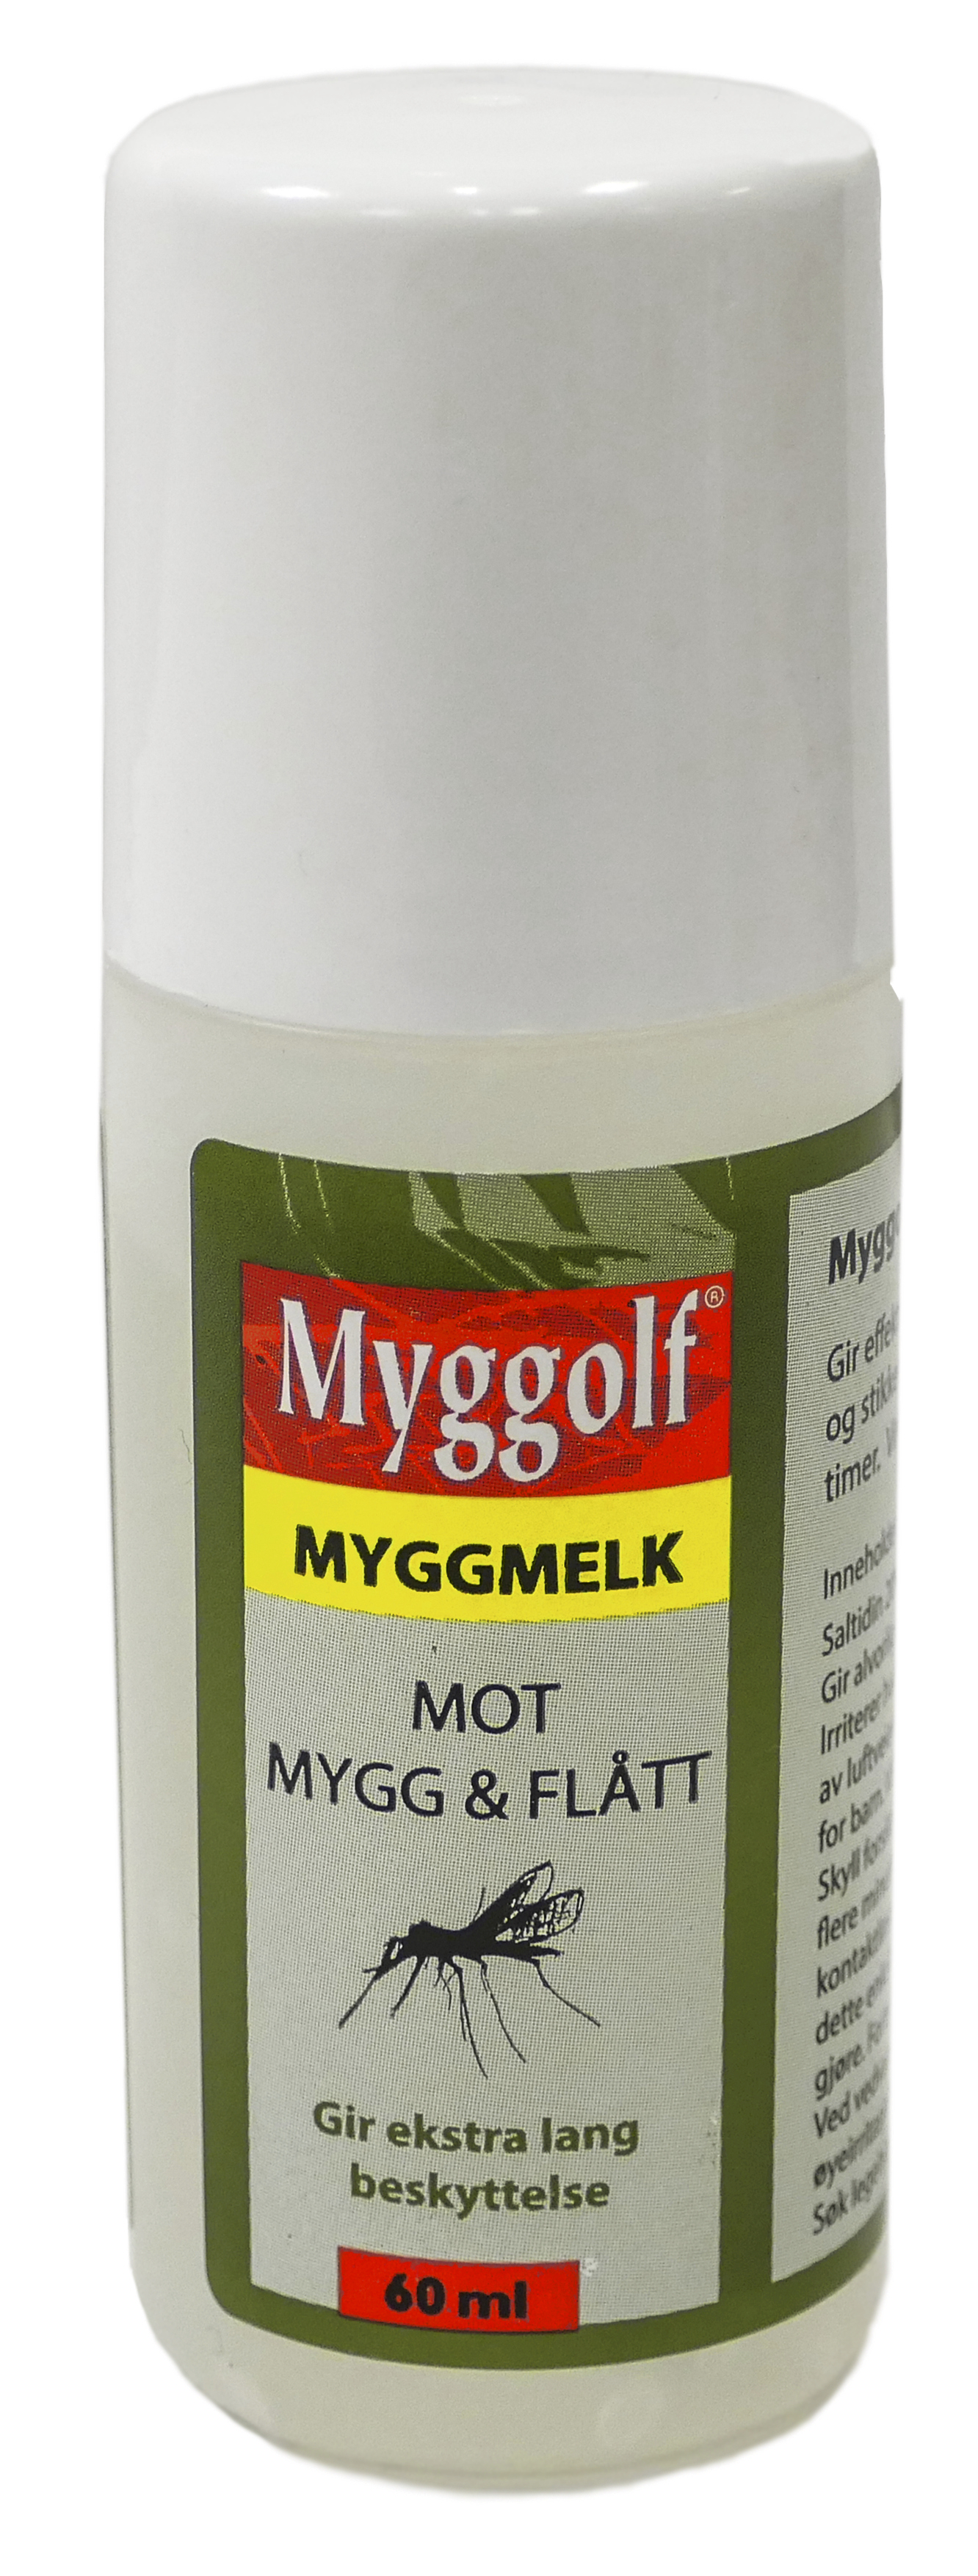 Myggolf Myggmelk insektsmiddel